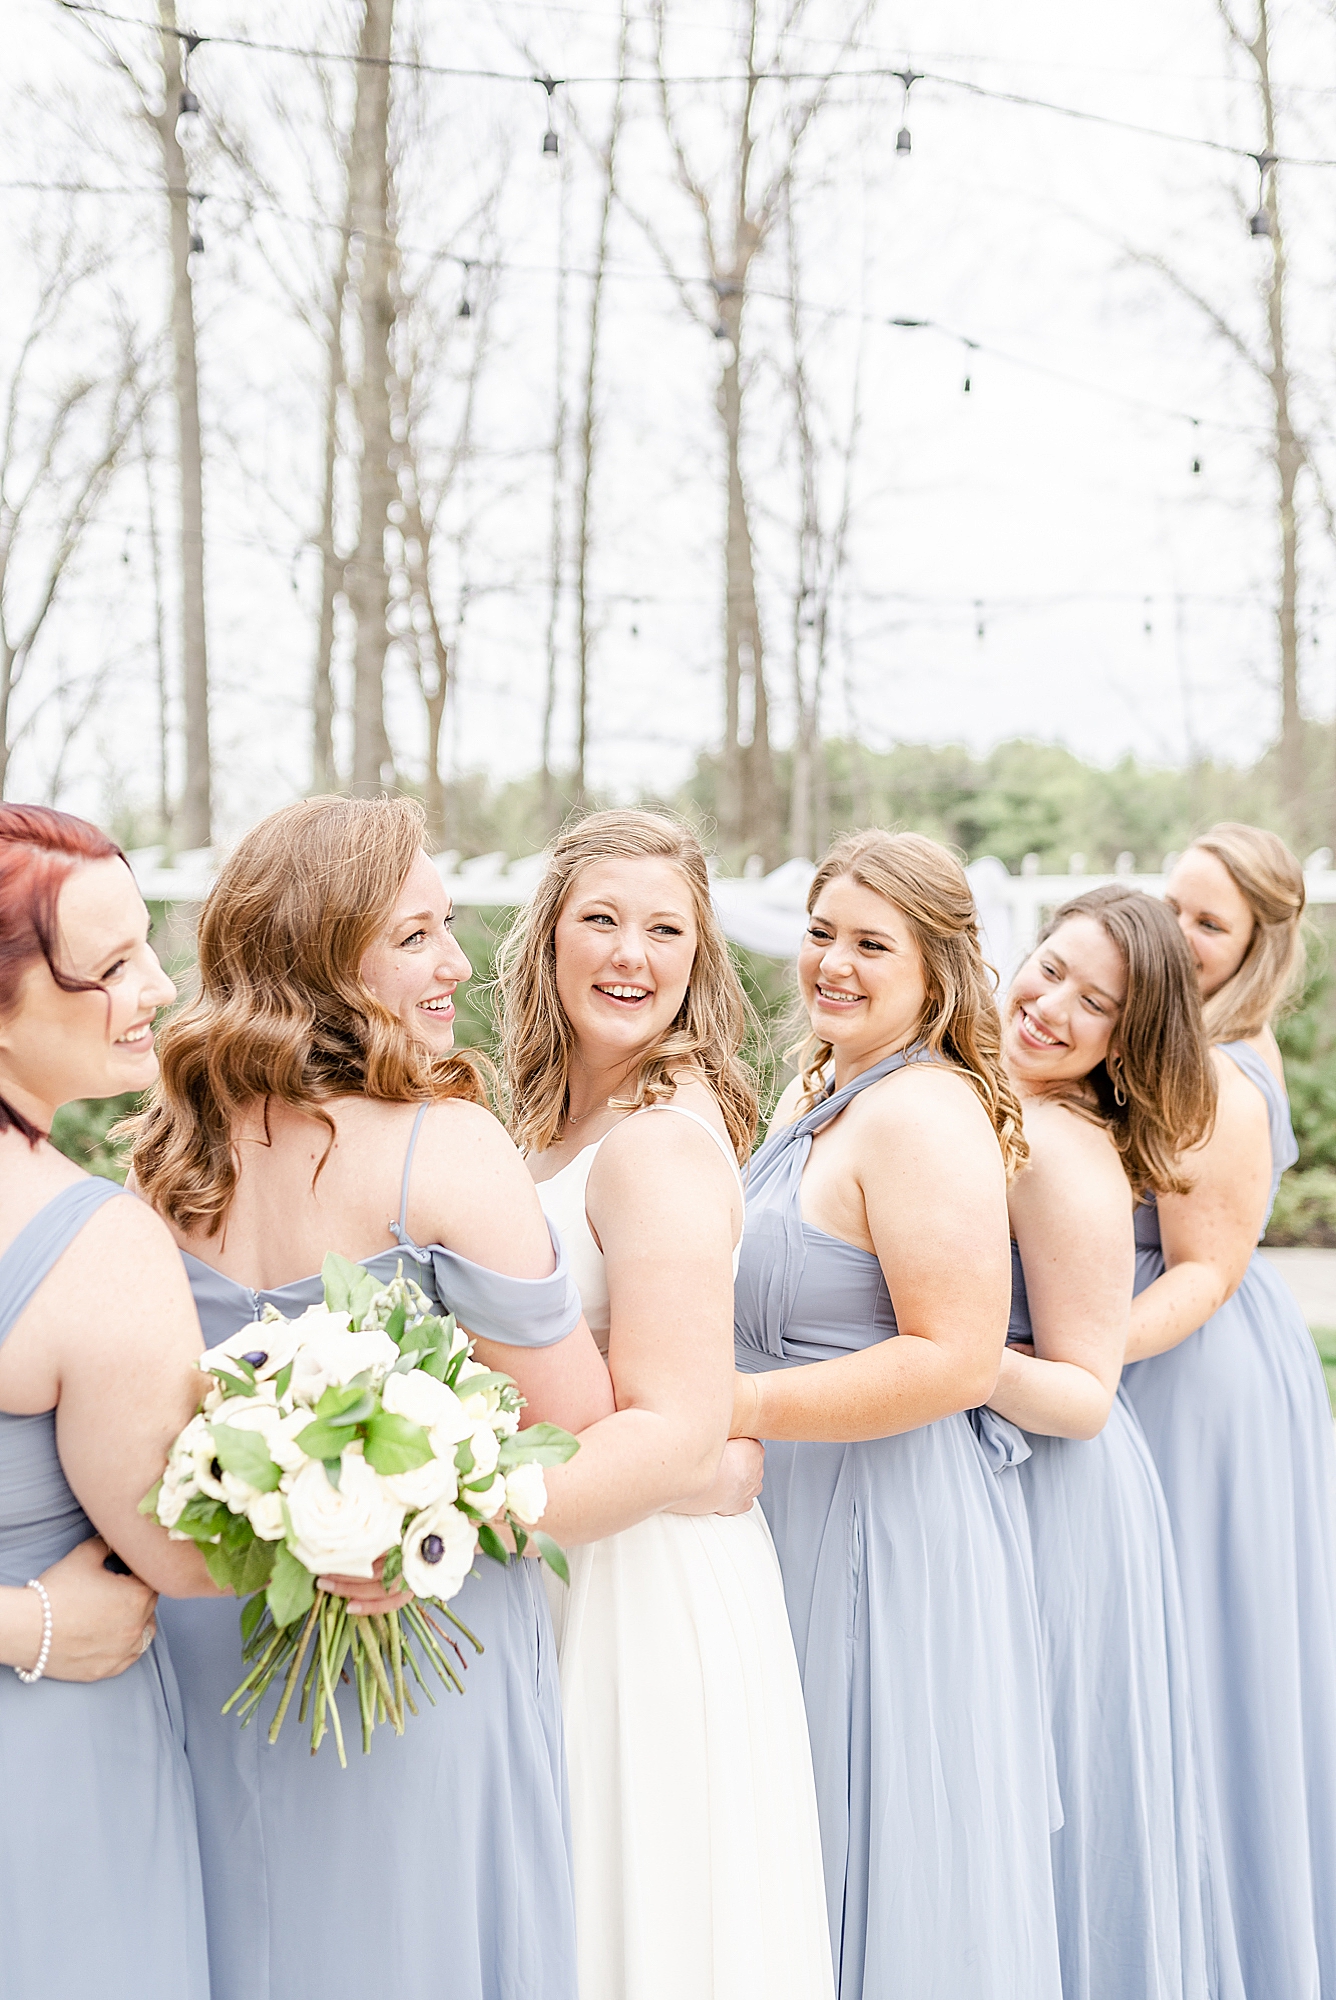 springtime bridal party inspiration in blue dresses